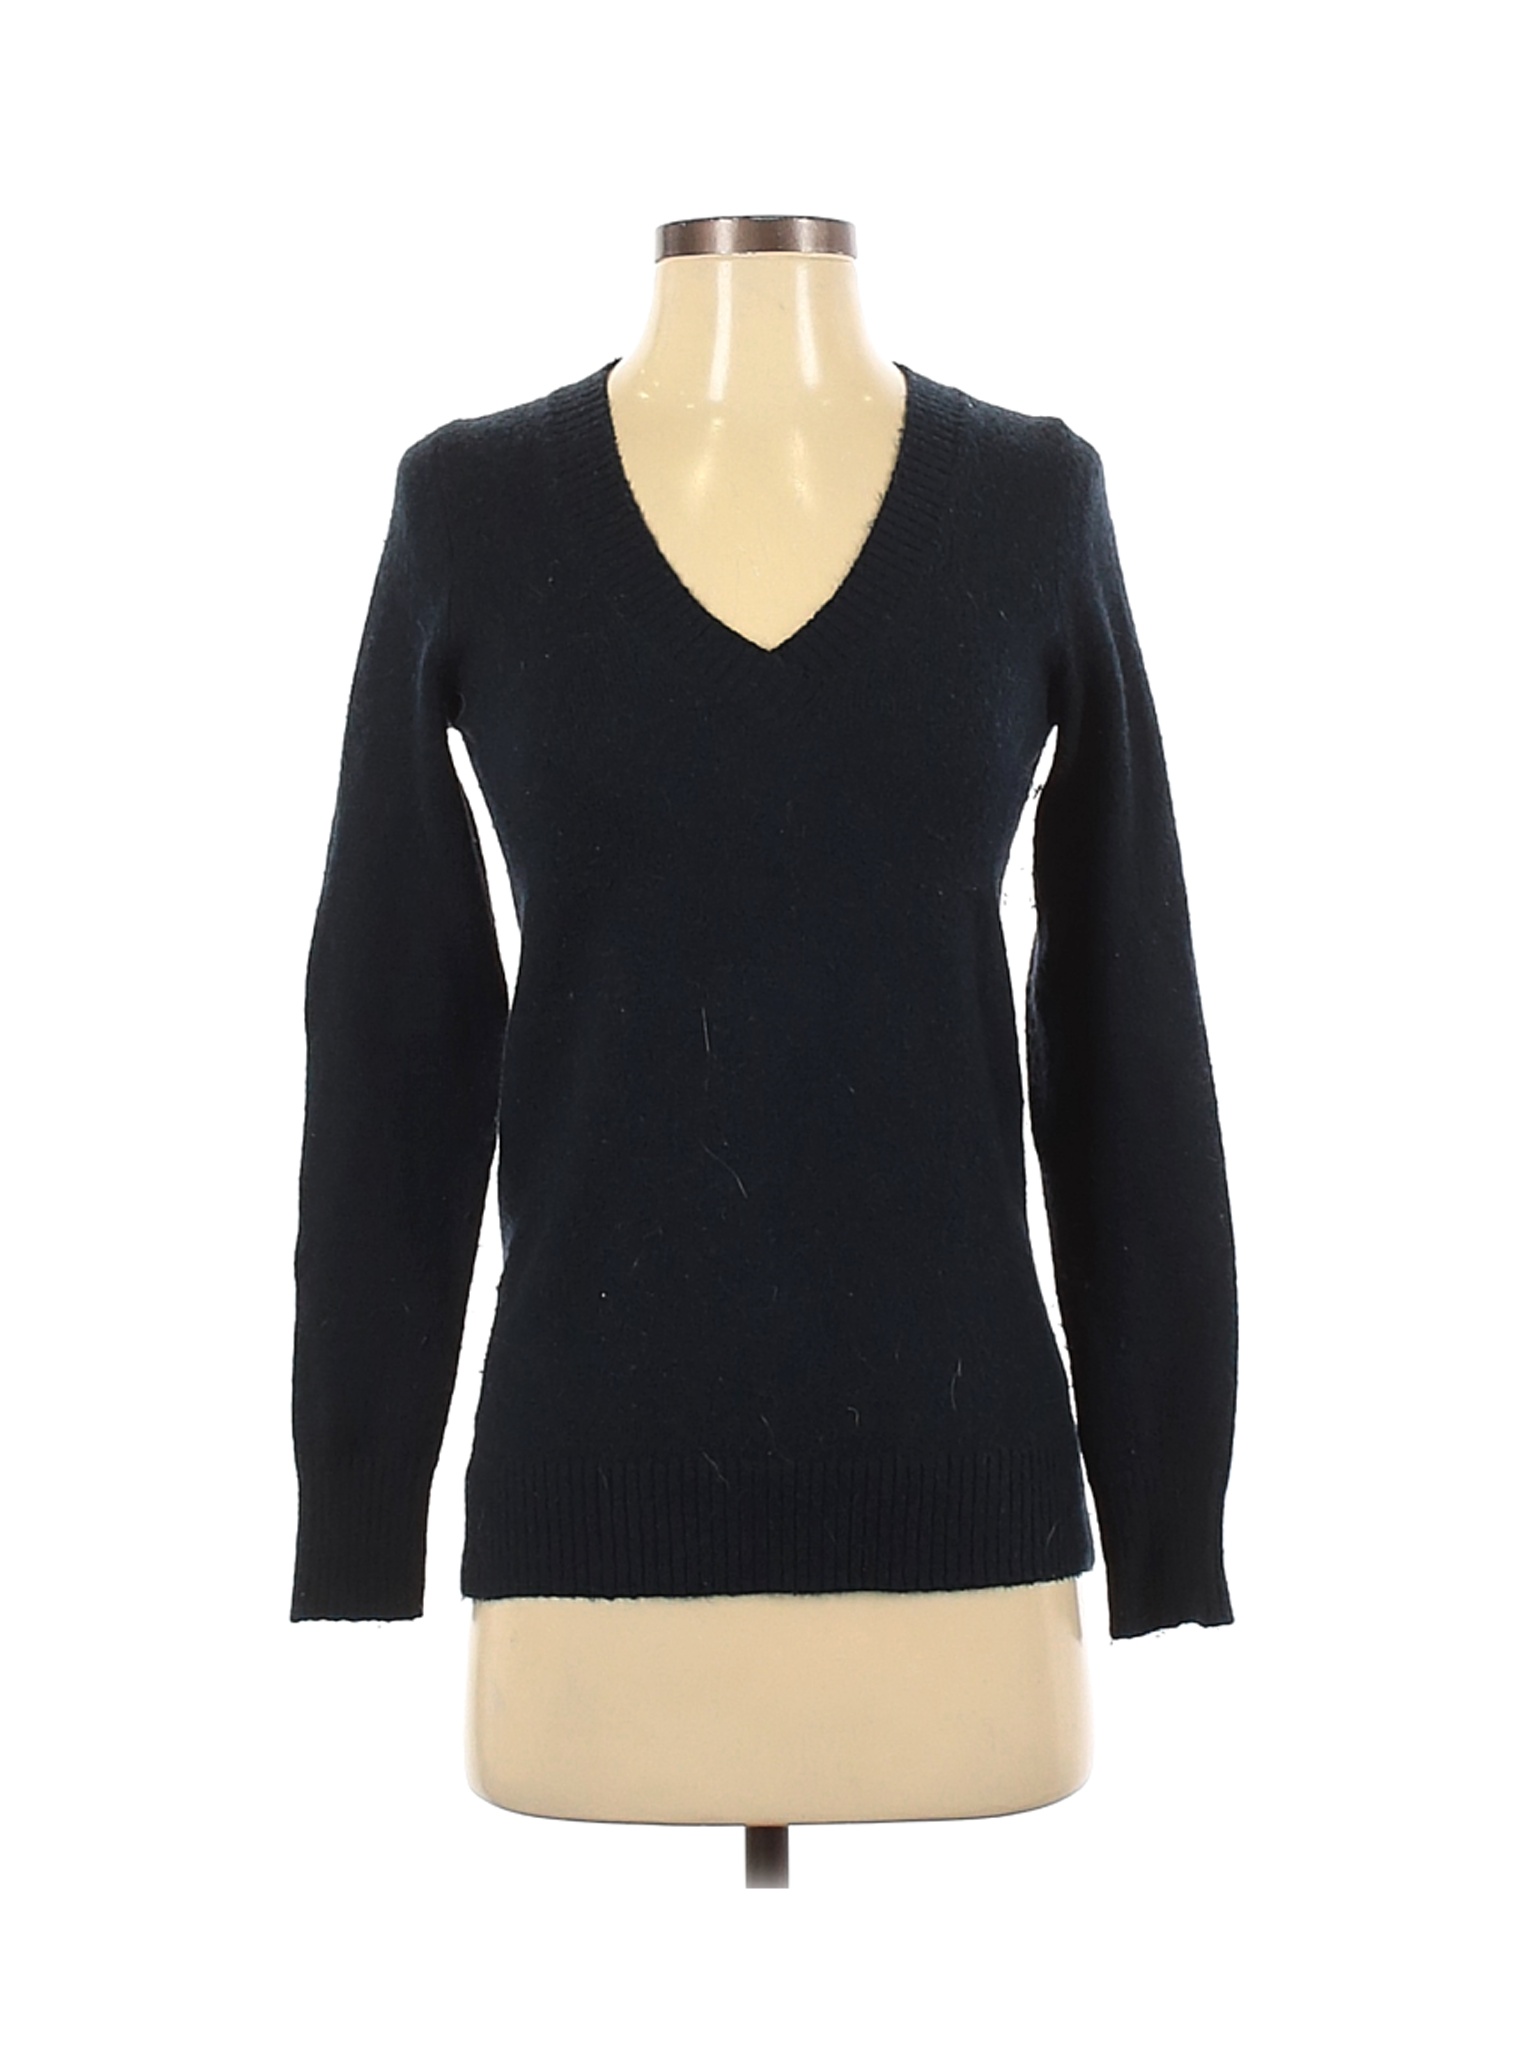 Gap Women Black Pullover Sweater S | eBay